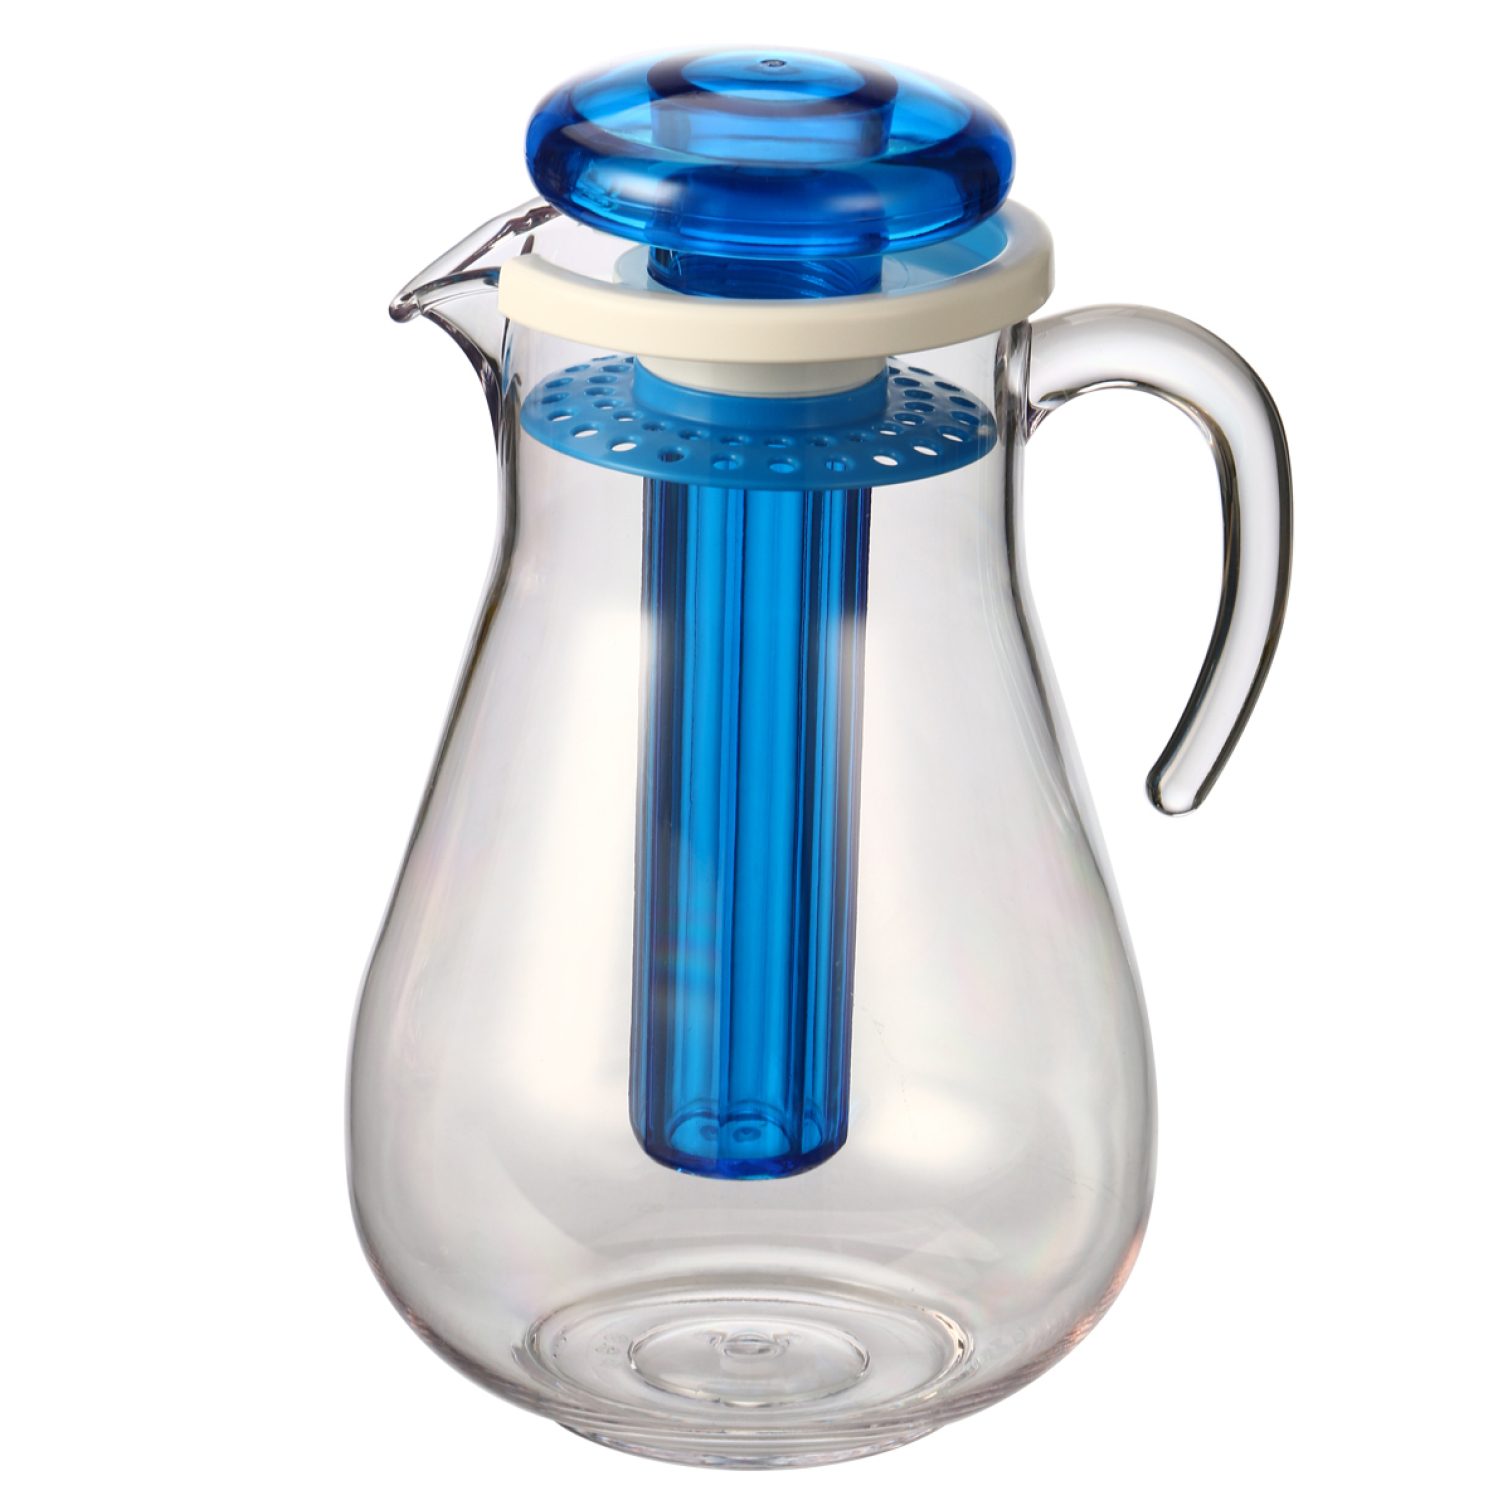 Aroma- und Kühlkrug, mit Kühlstab und Sieb, 2,8 Liter Kühlkaraffe blau